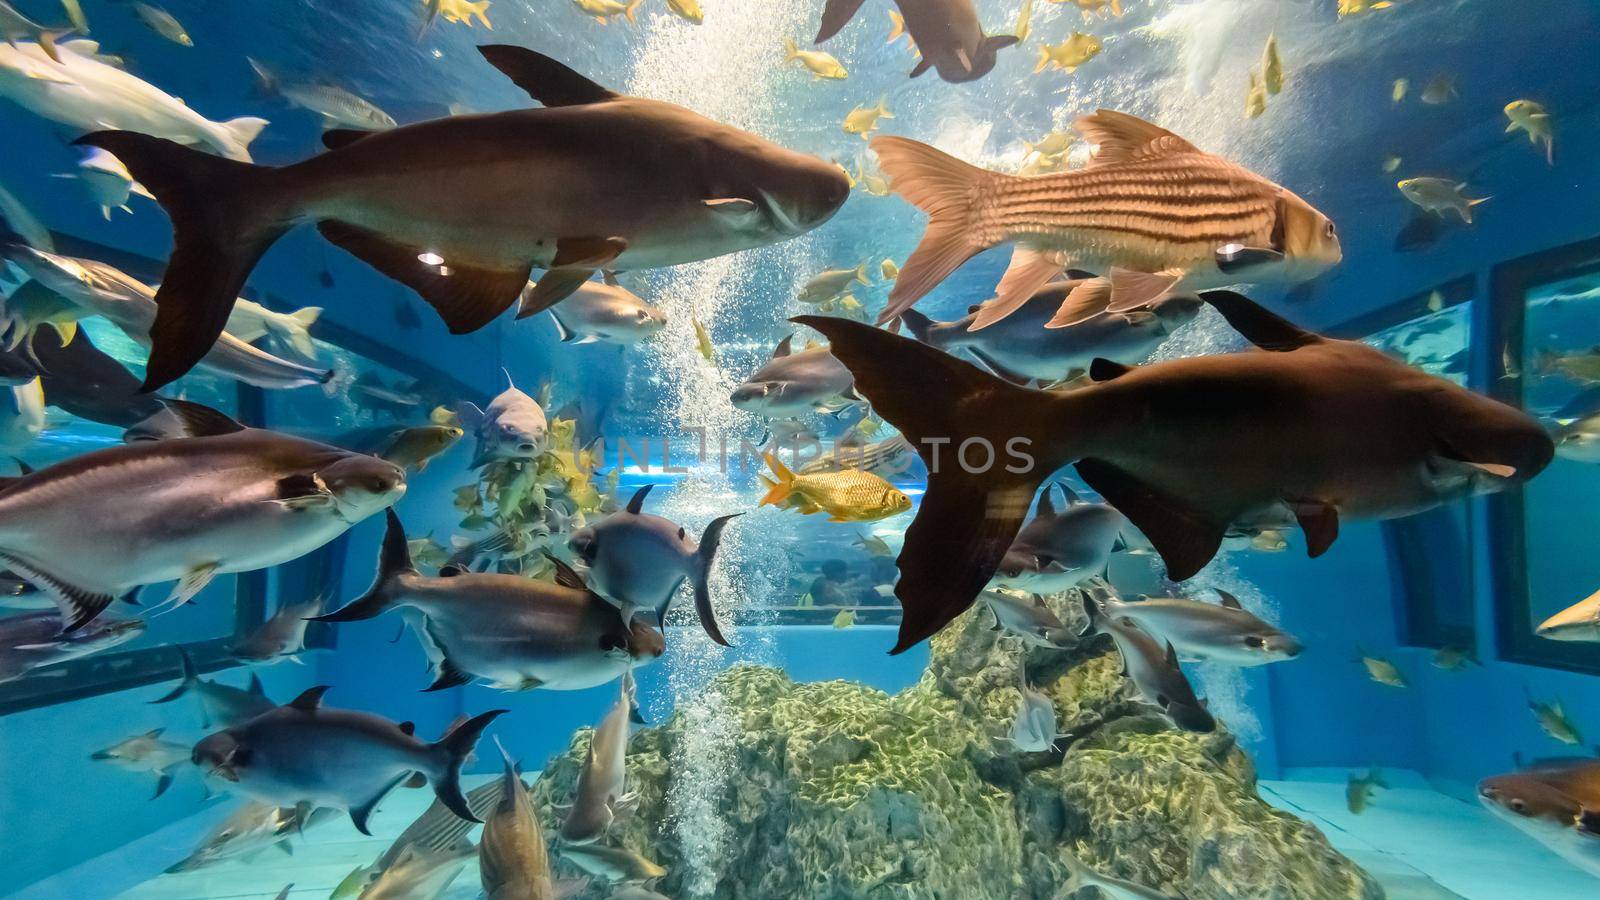 Aquarium of freshwater fish by Yongkiet